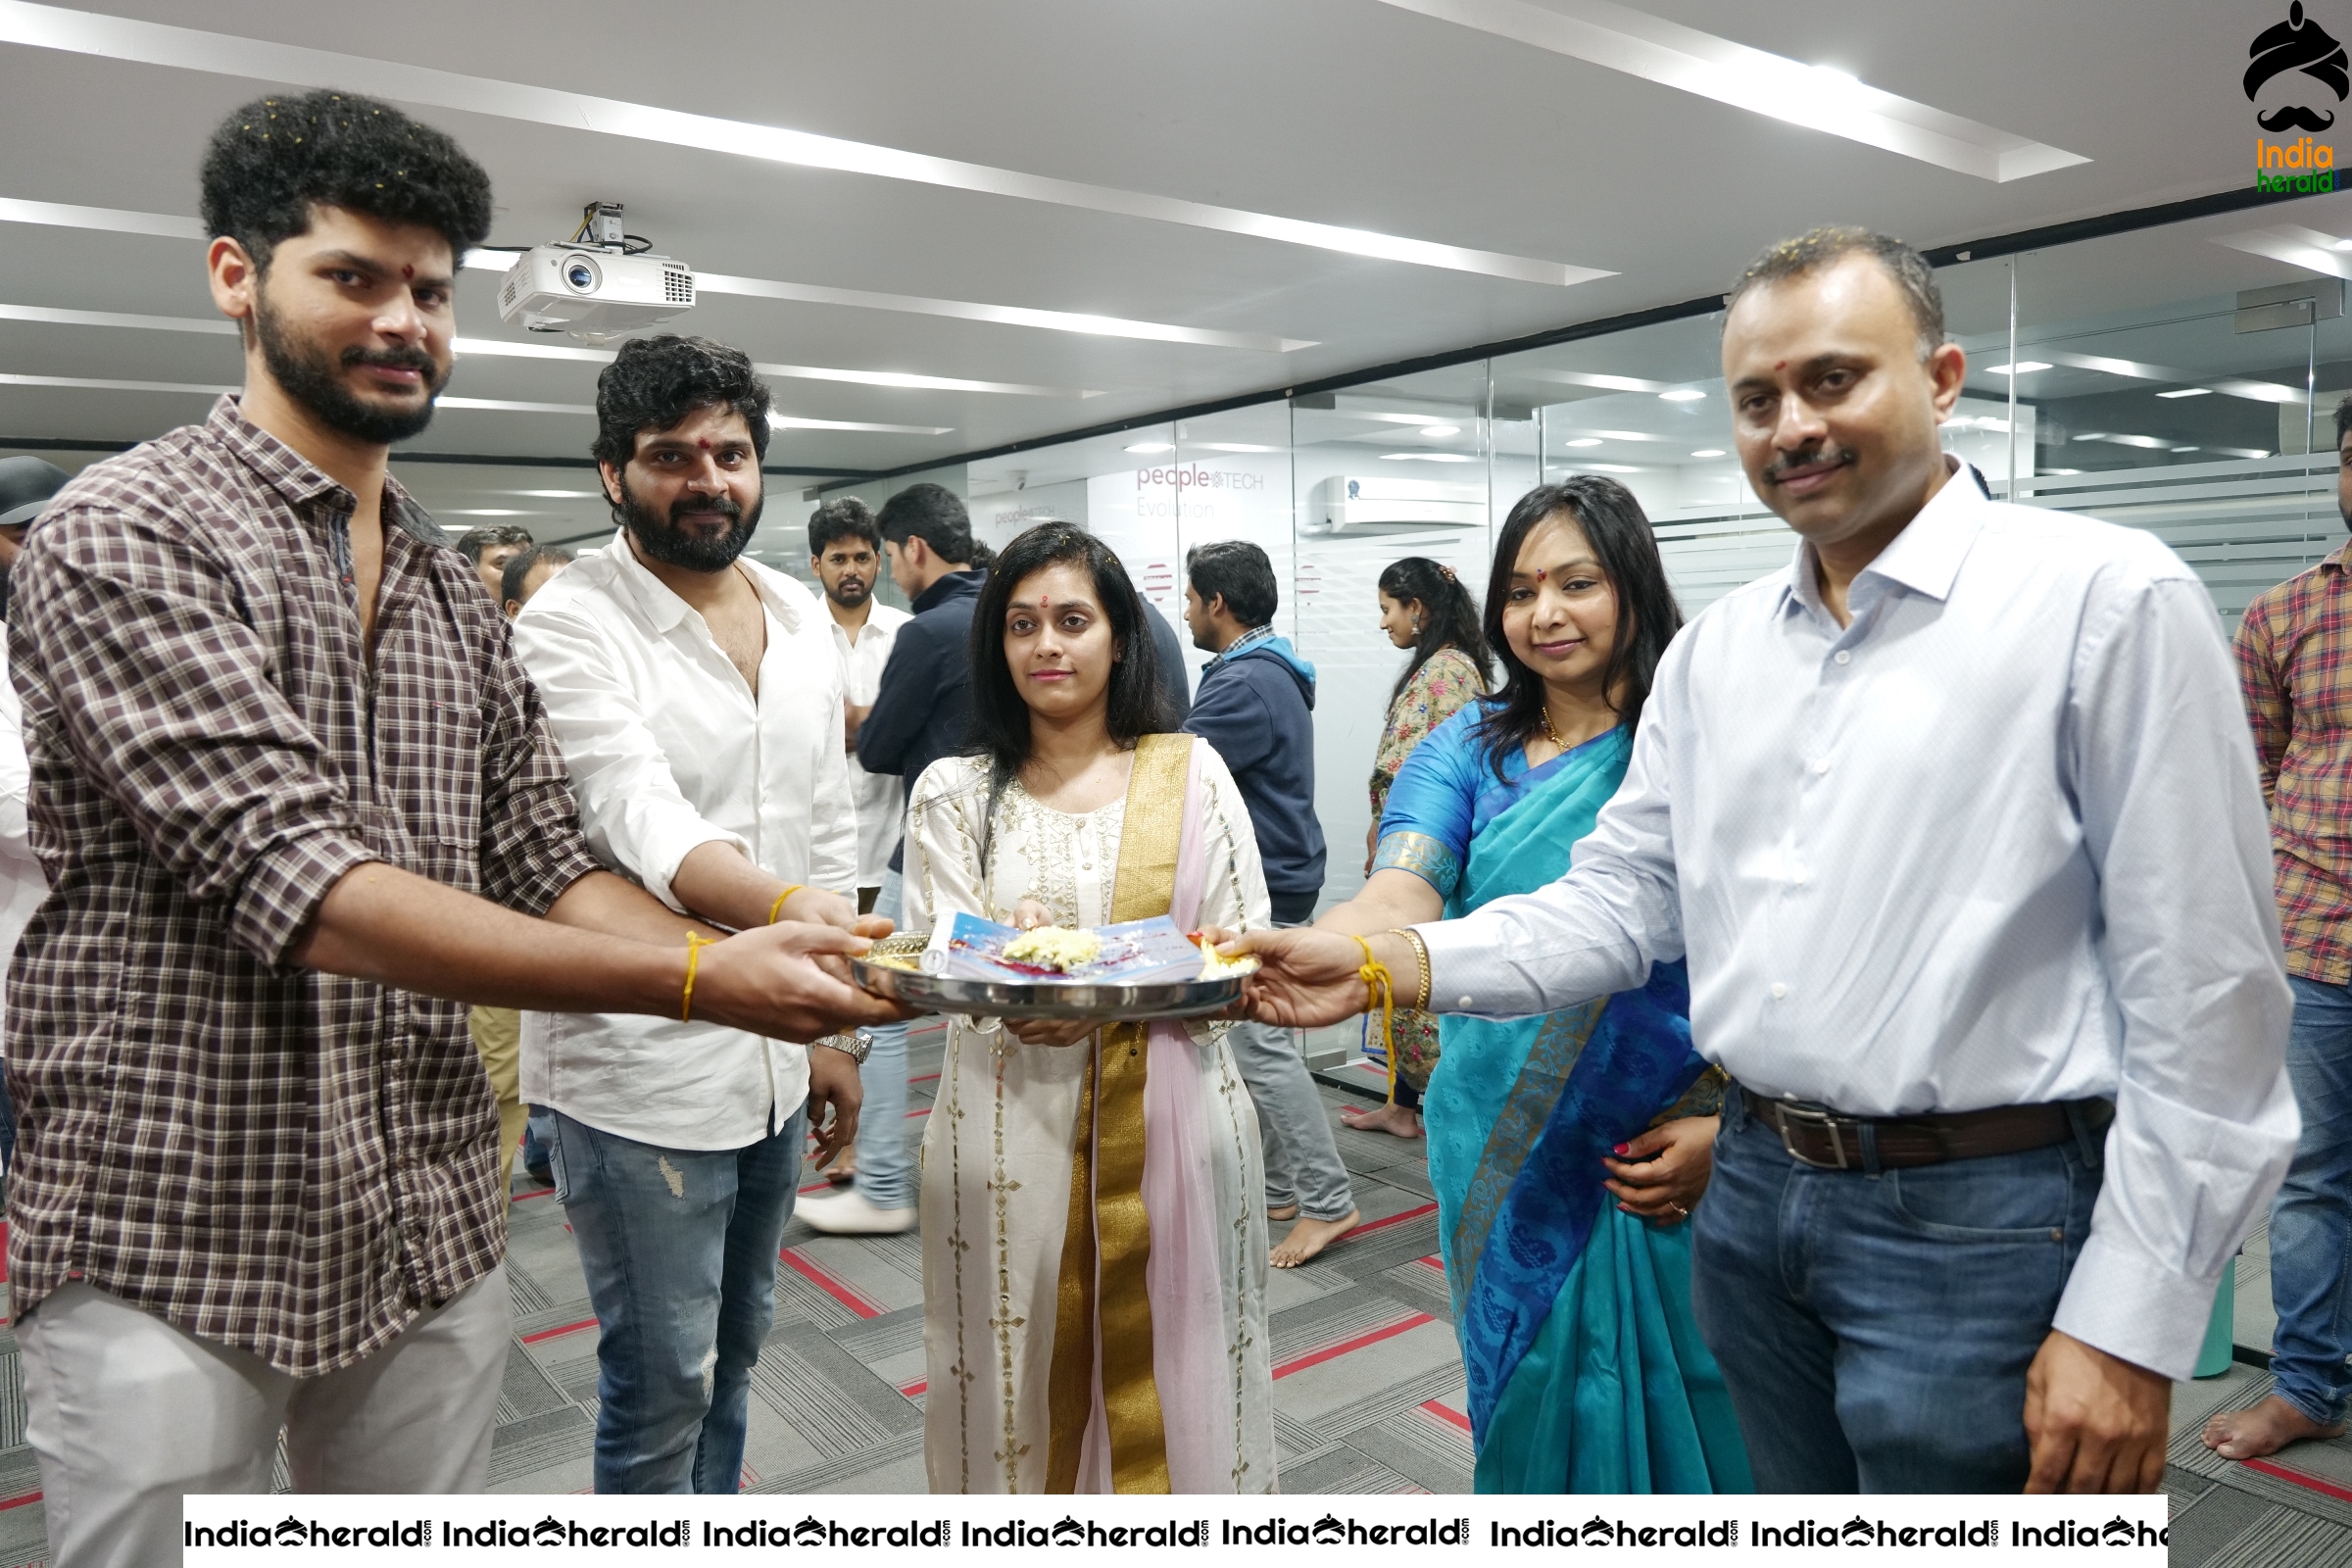 Sree Vishnu new movie launched under People Media Factory Banner